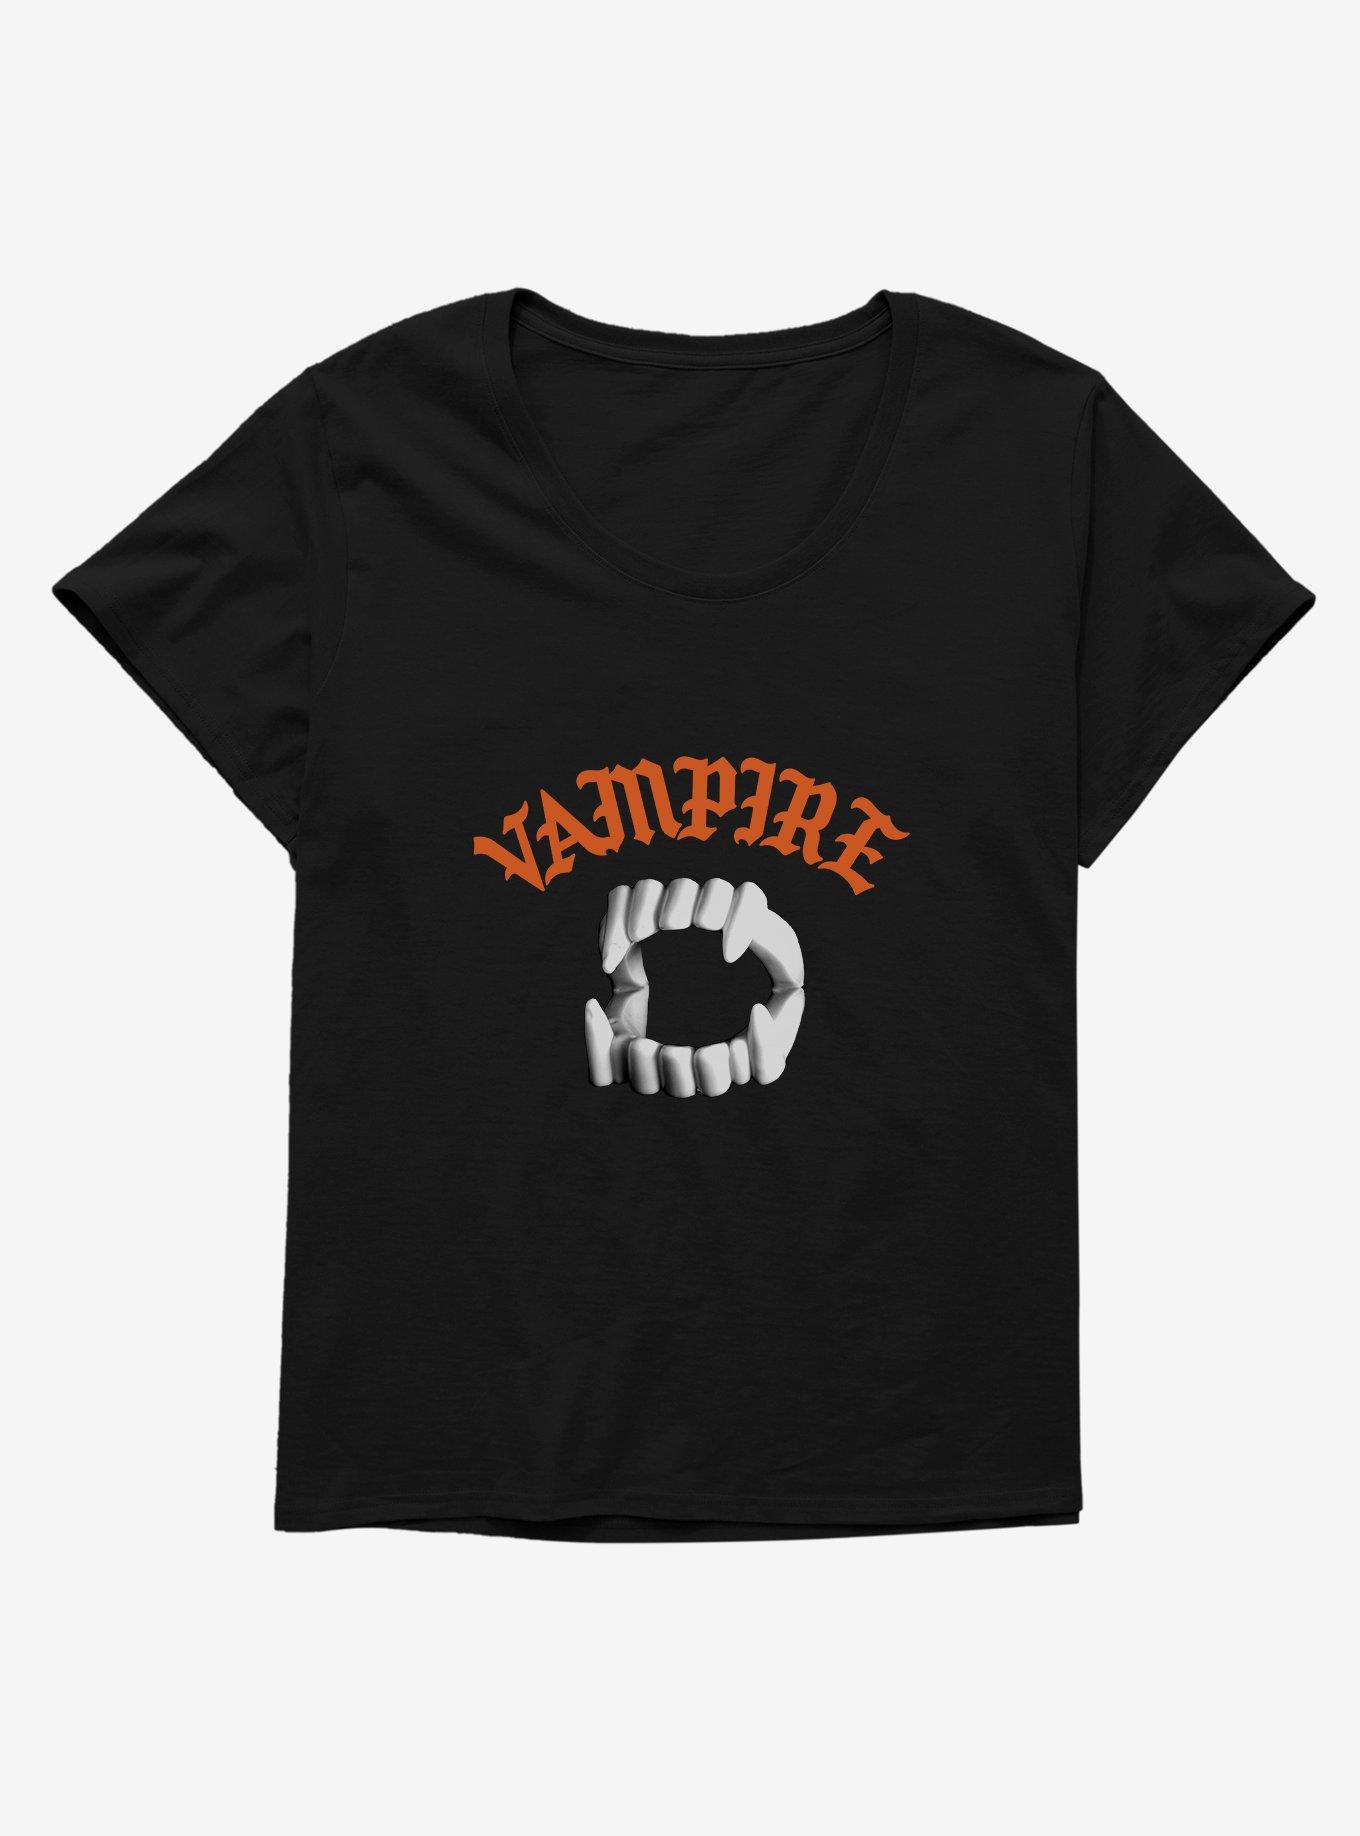 Hot Topic Vampire Teeth Girls T-Shirt Plus Size, BLACK, hi-res